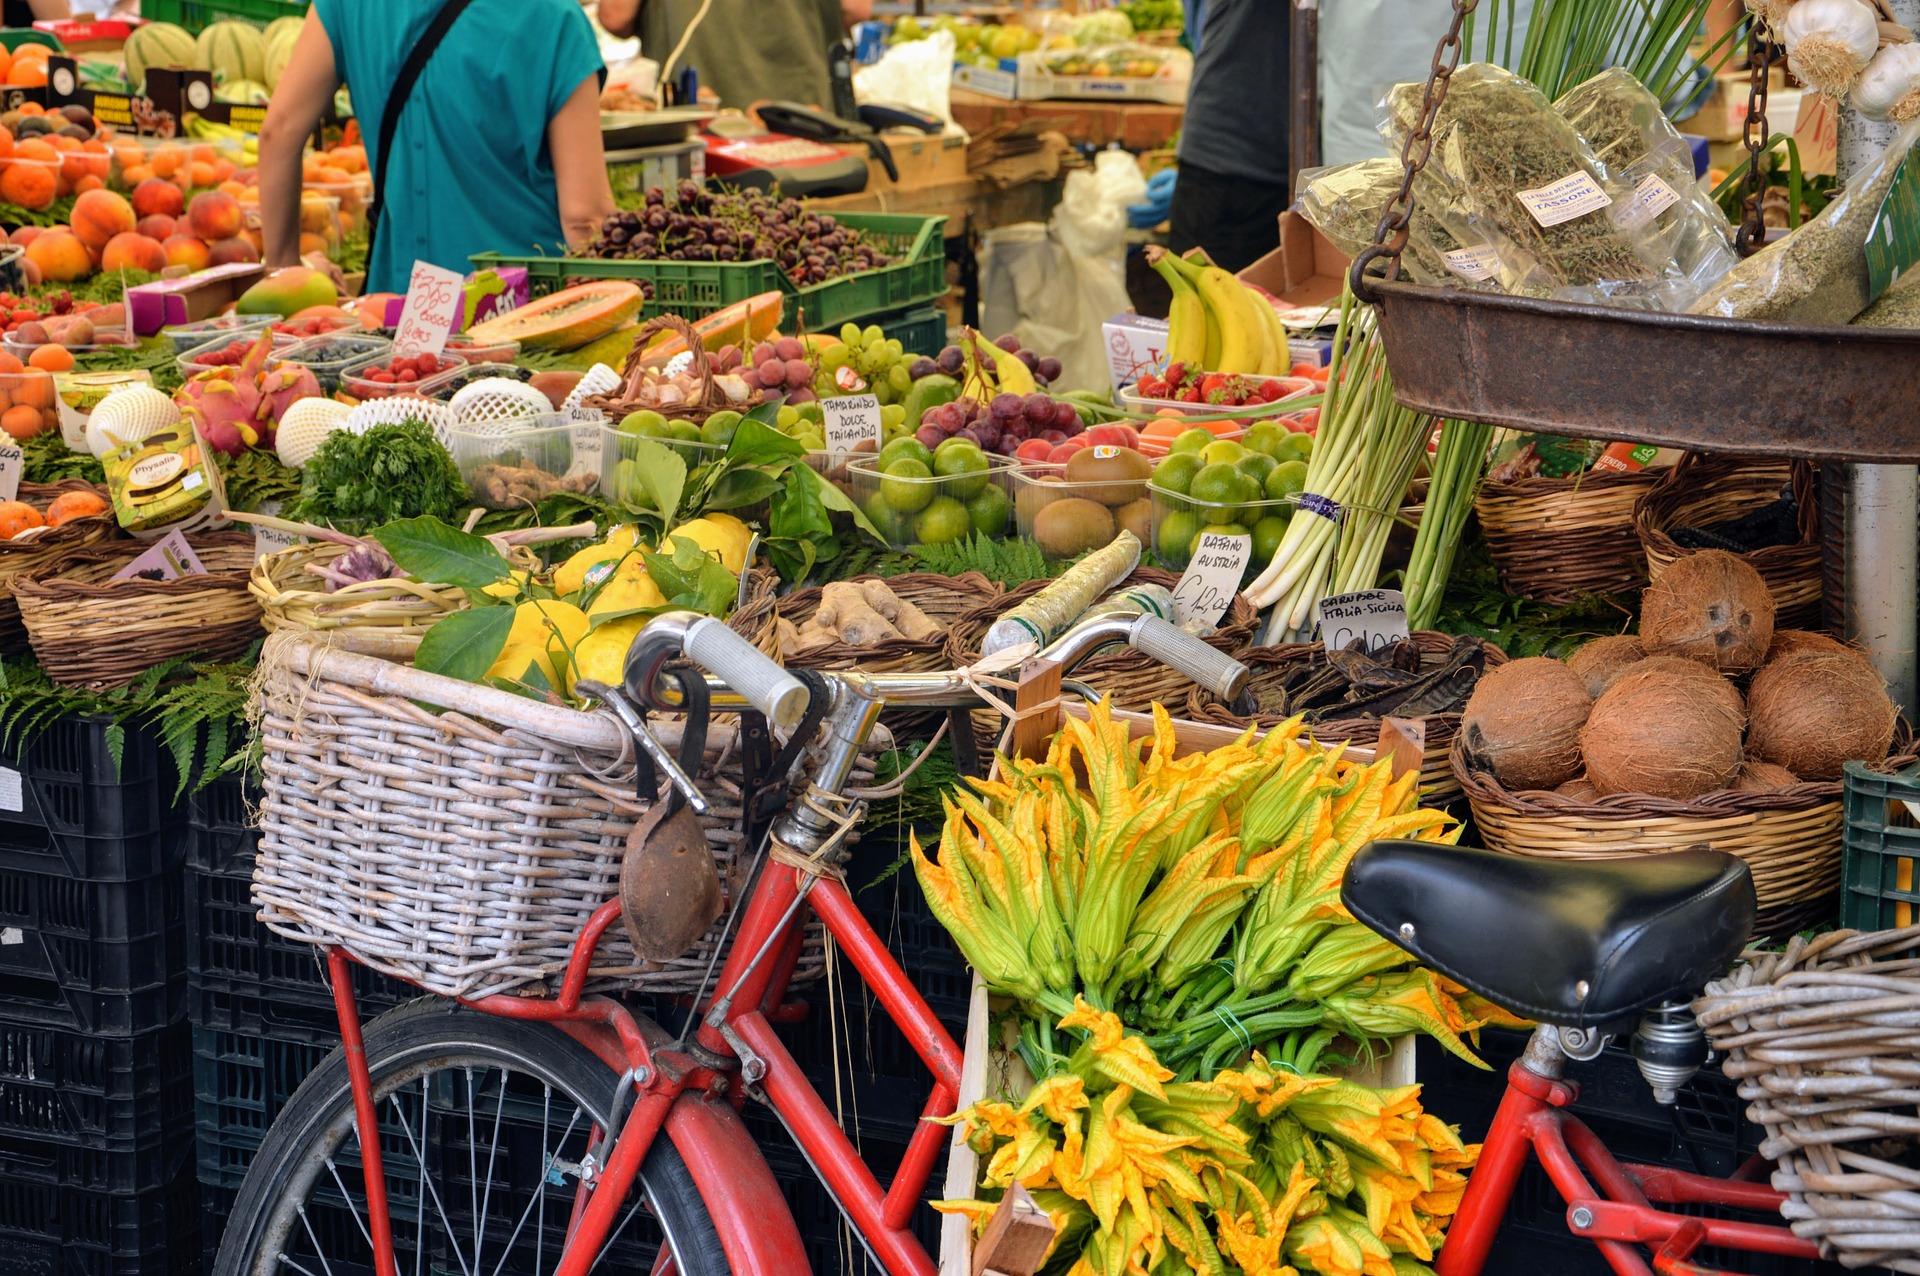 street market, italian experience, tuscan market, food market, clothes market, merkets, street market